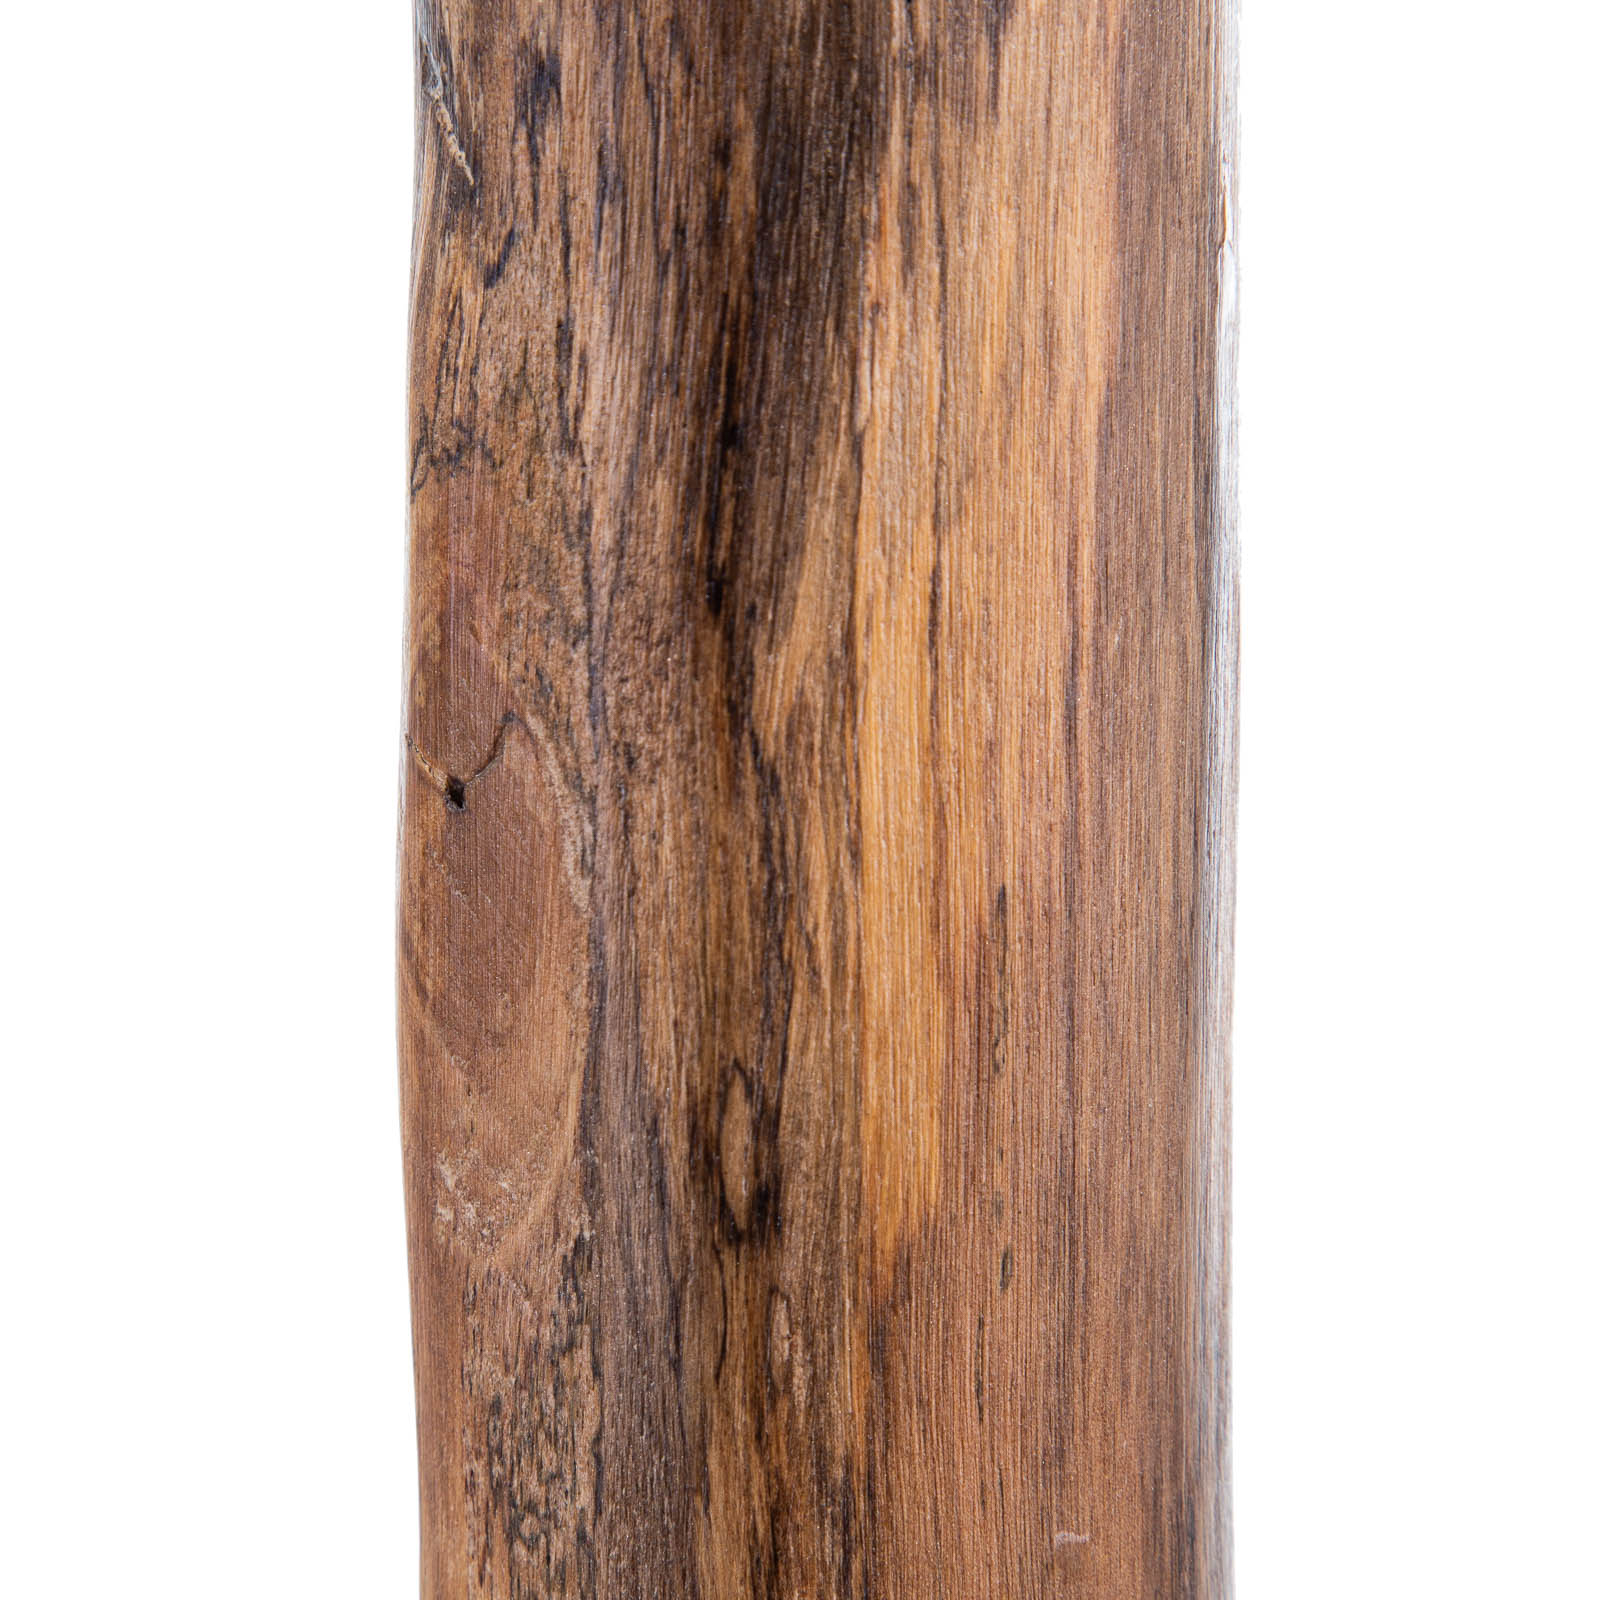 Norin floor lamp with eucalyptus wood frame